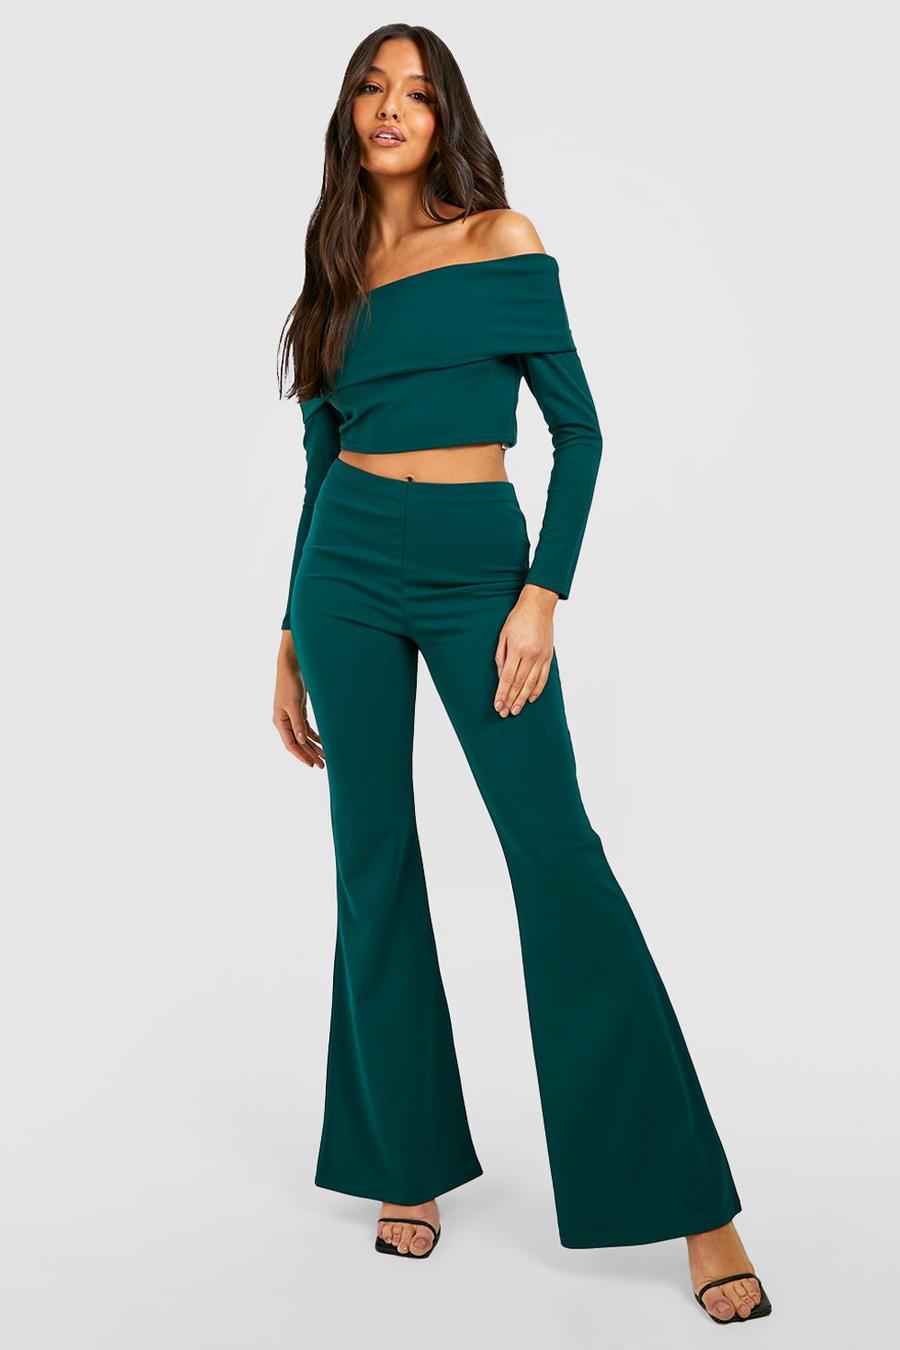 Emerald Long Sleeve Bardot Top & Flare Pants image number 1